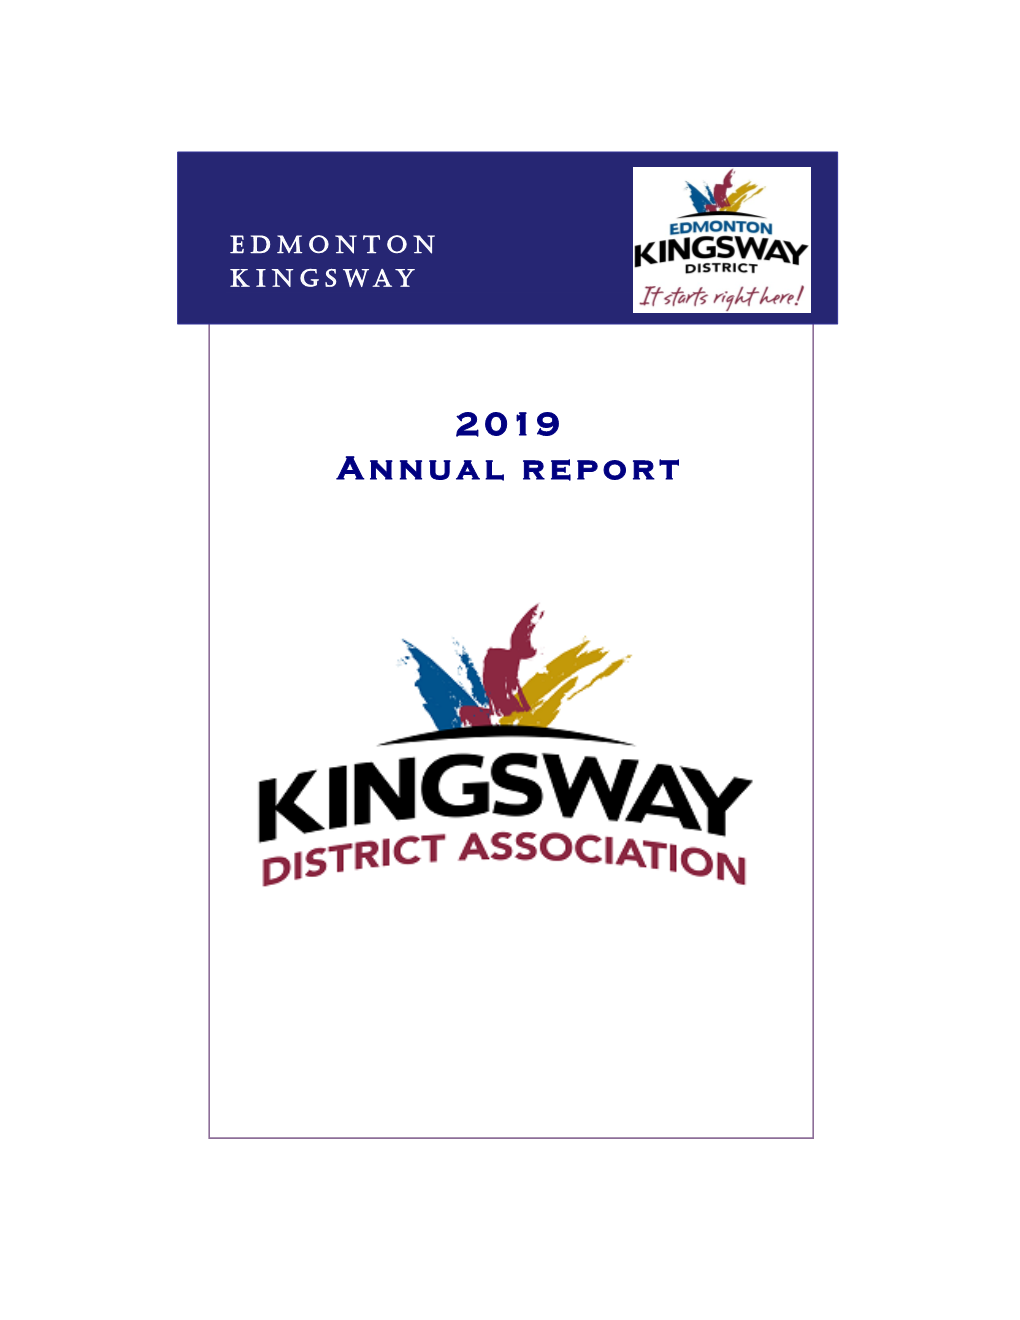 Kingsway District Association